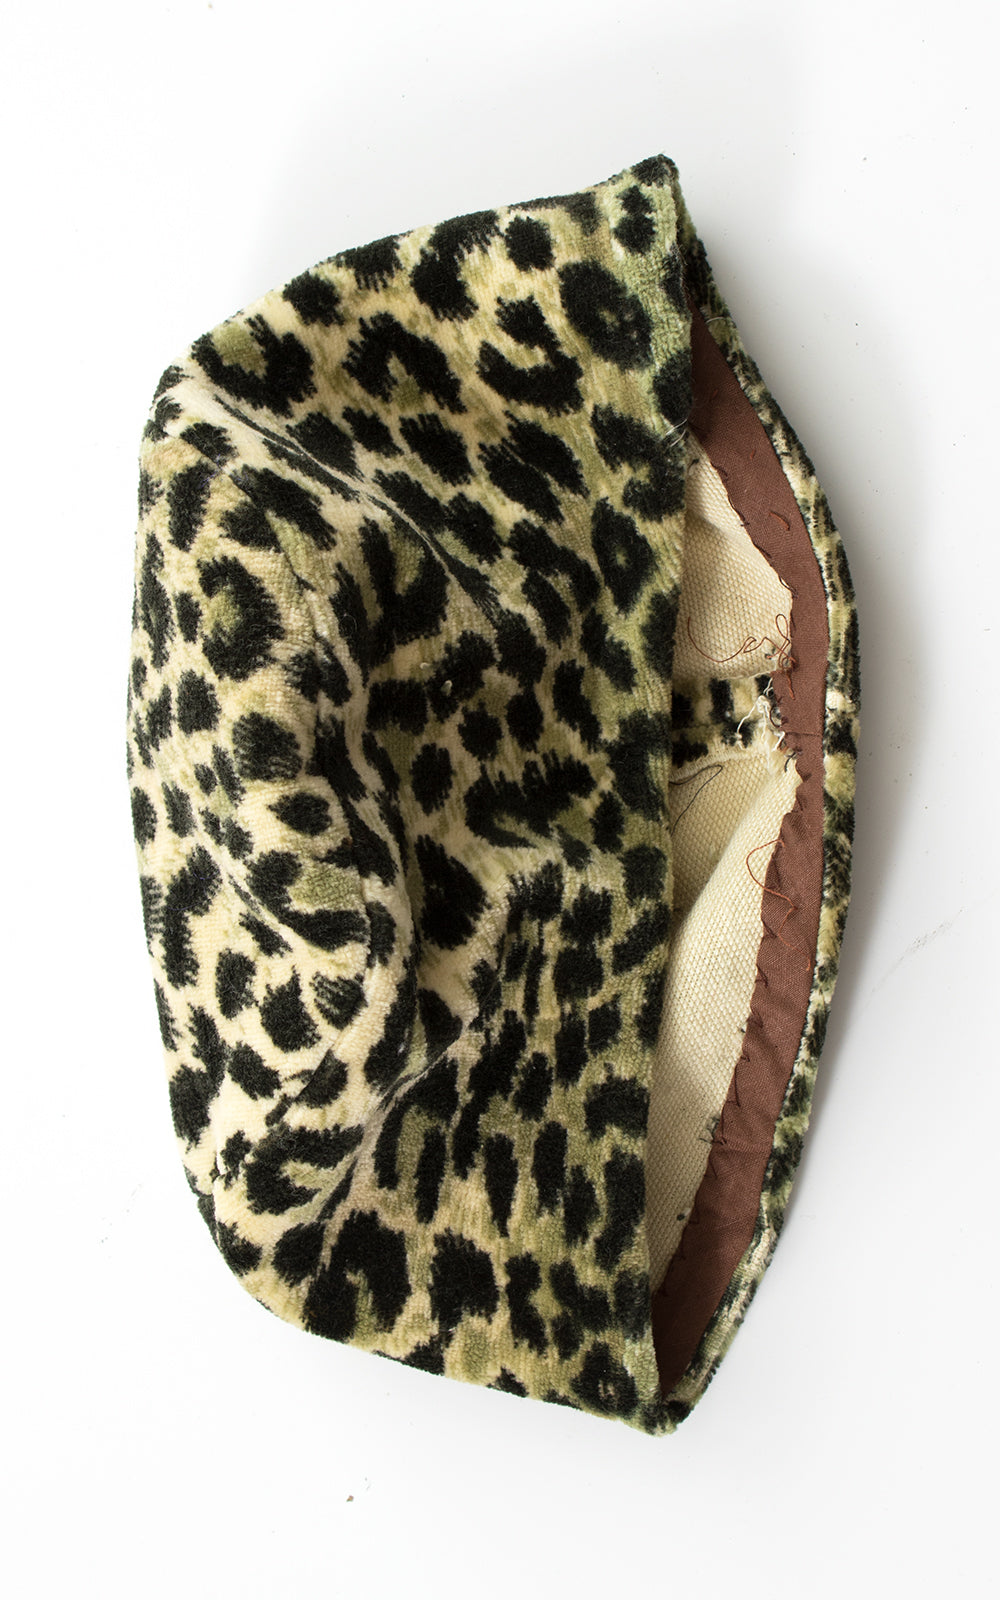 1960s Leopard Print Faux Fur Hat, Scarf & Handbag Set